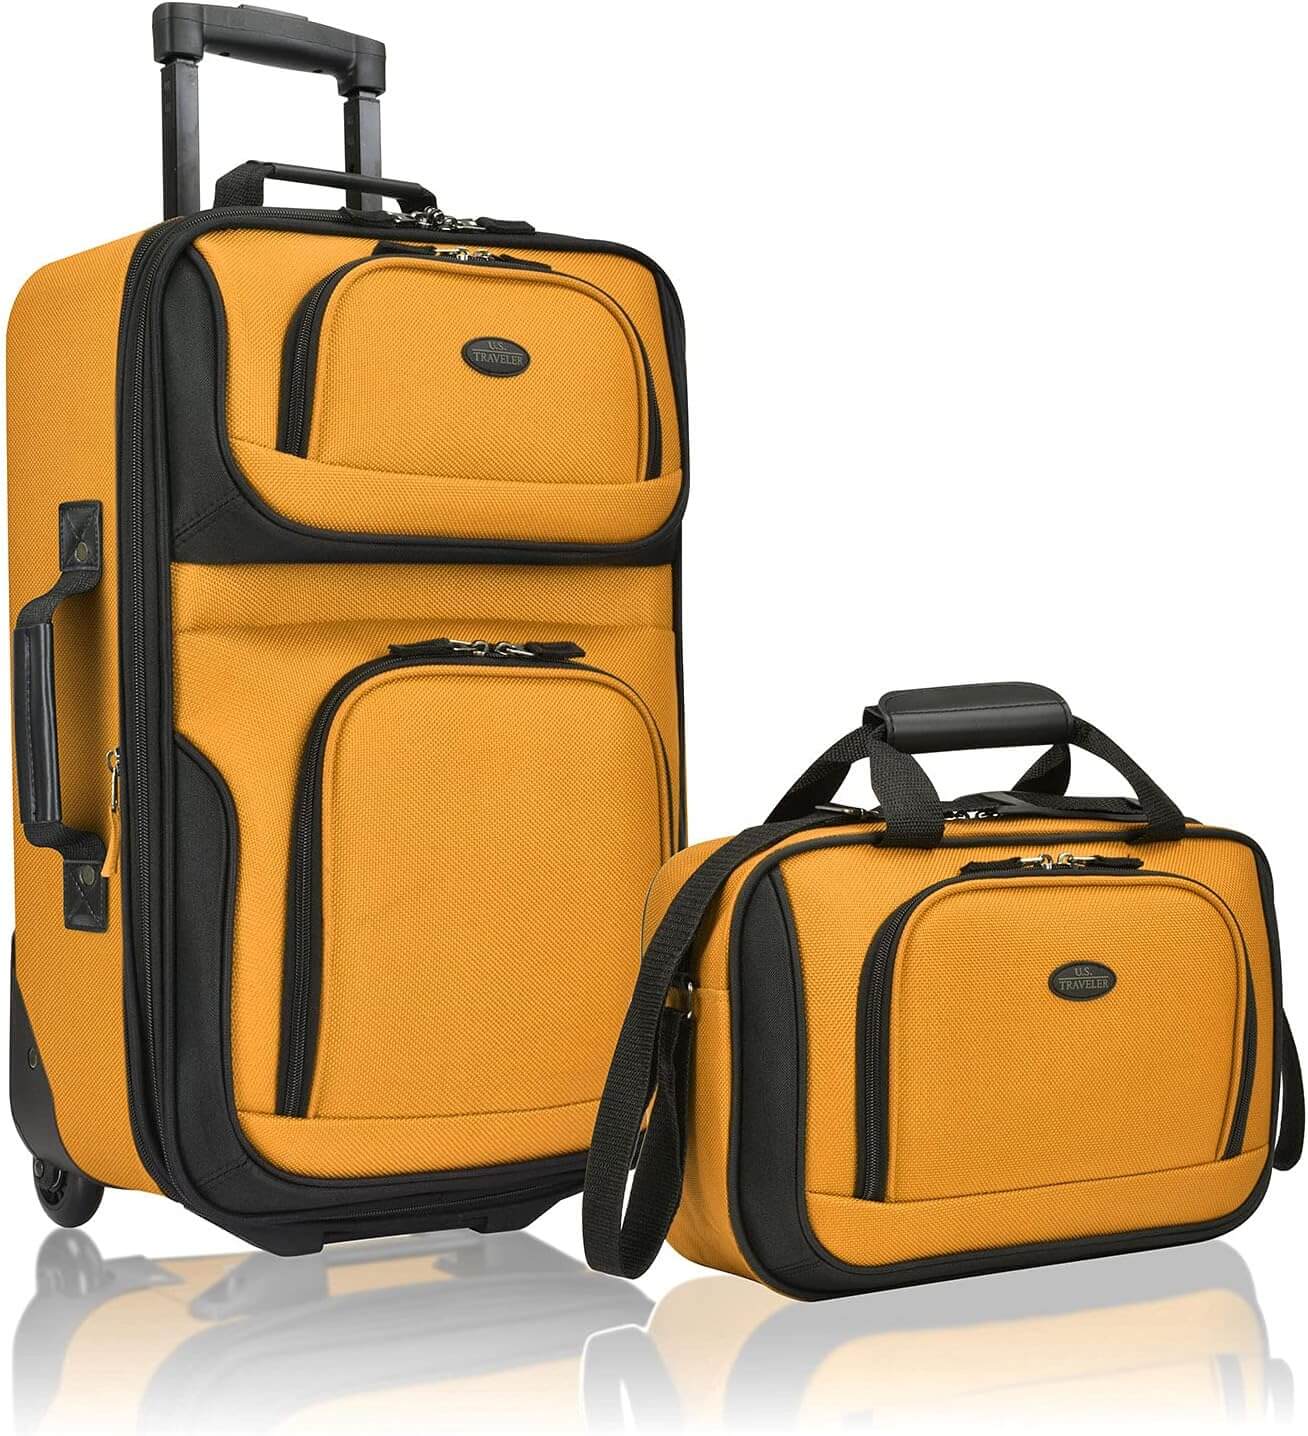 U.S. Traveler Rio Carry-On Luggage Set